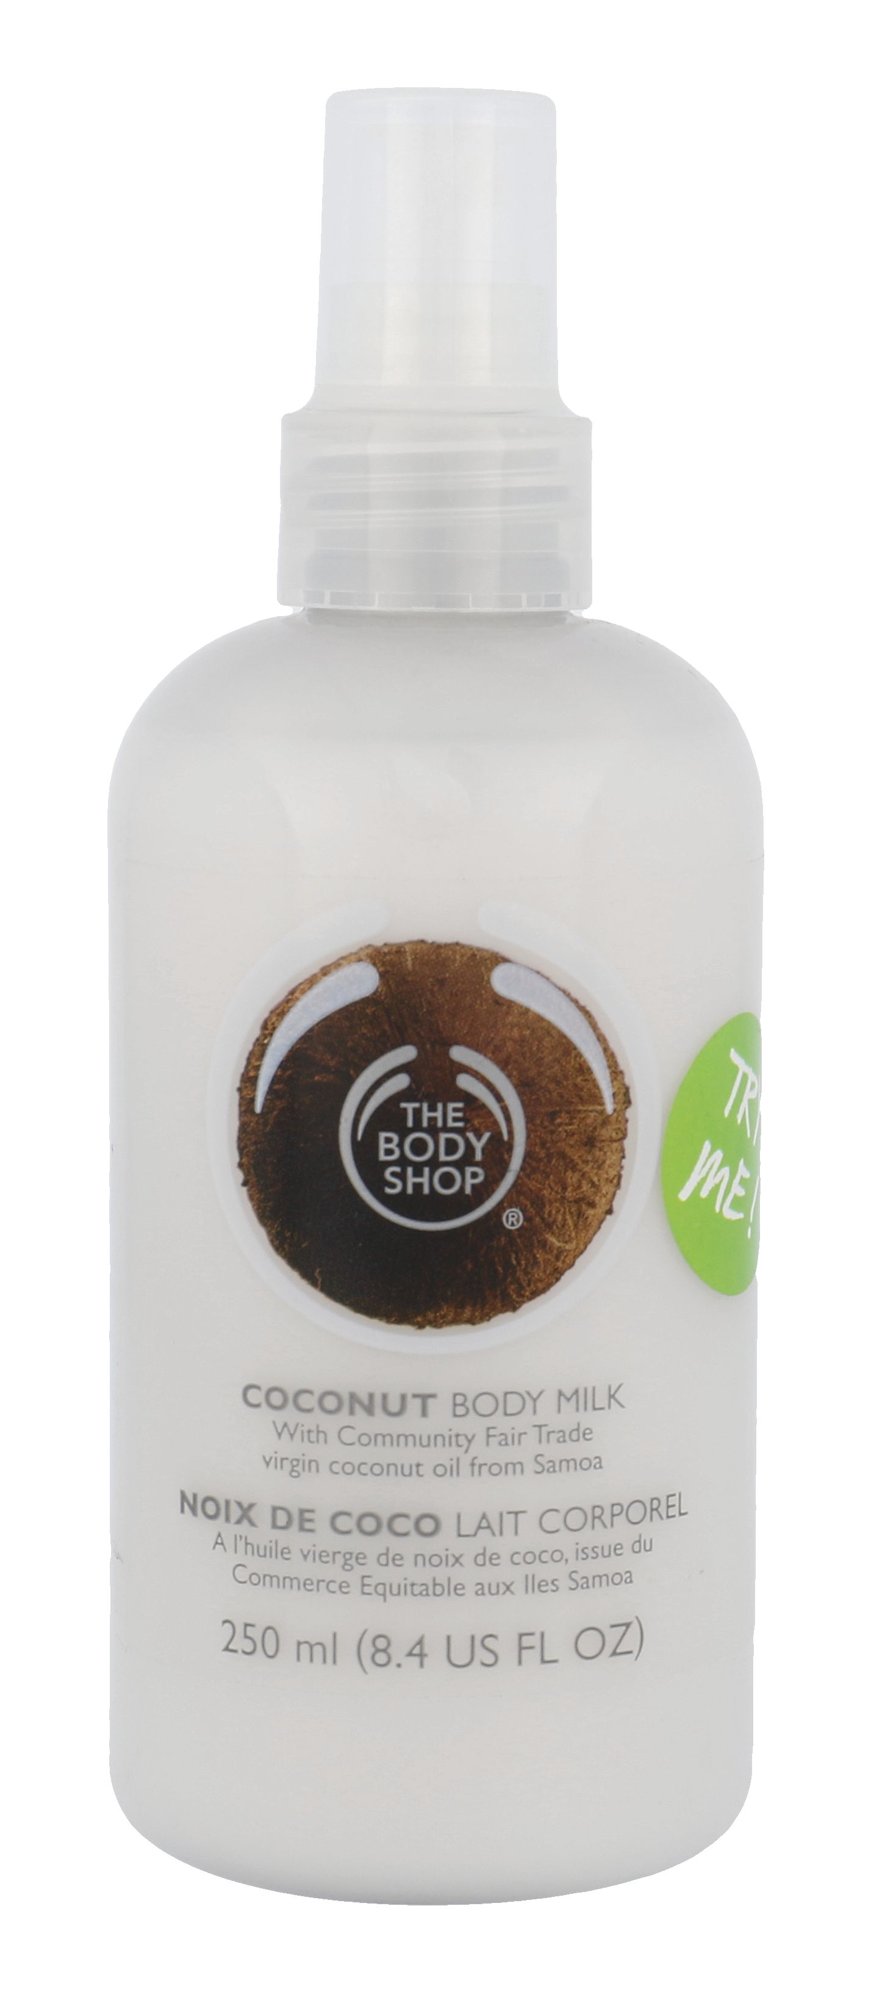 The Body Shop Coconut Body Milk